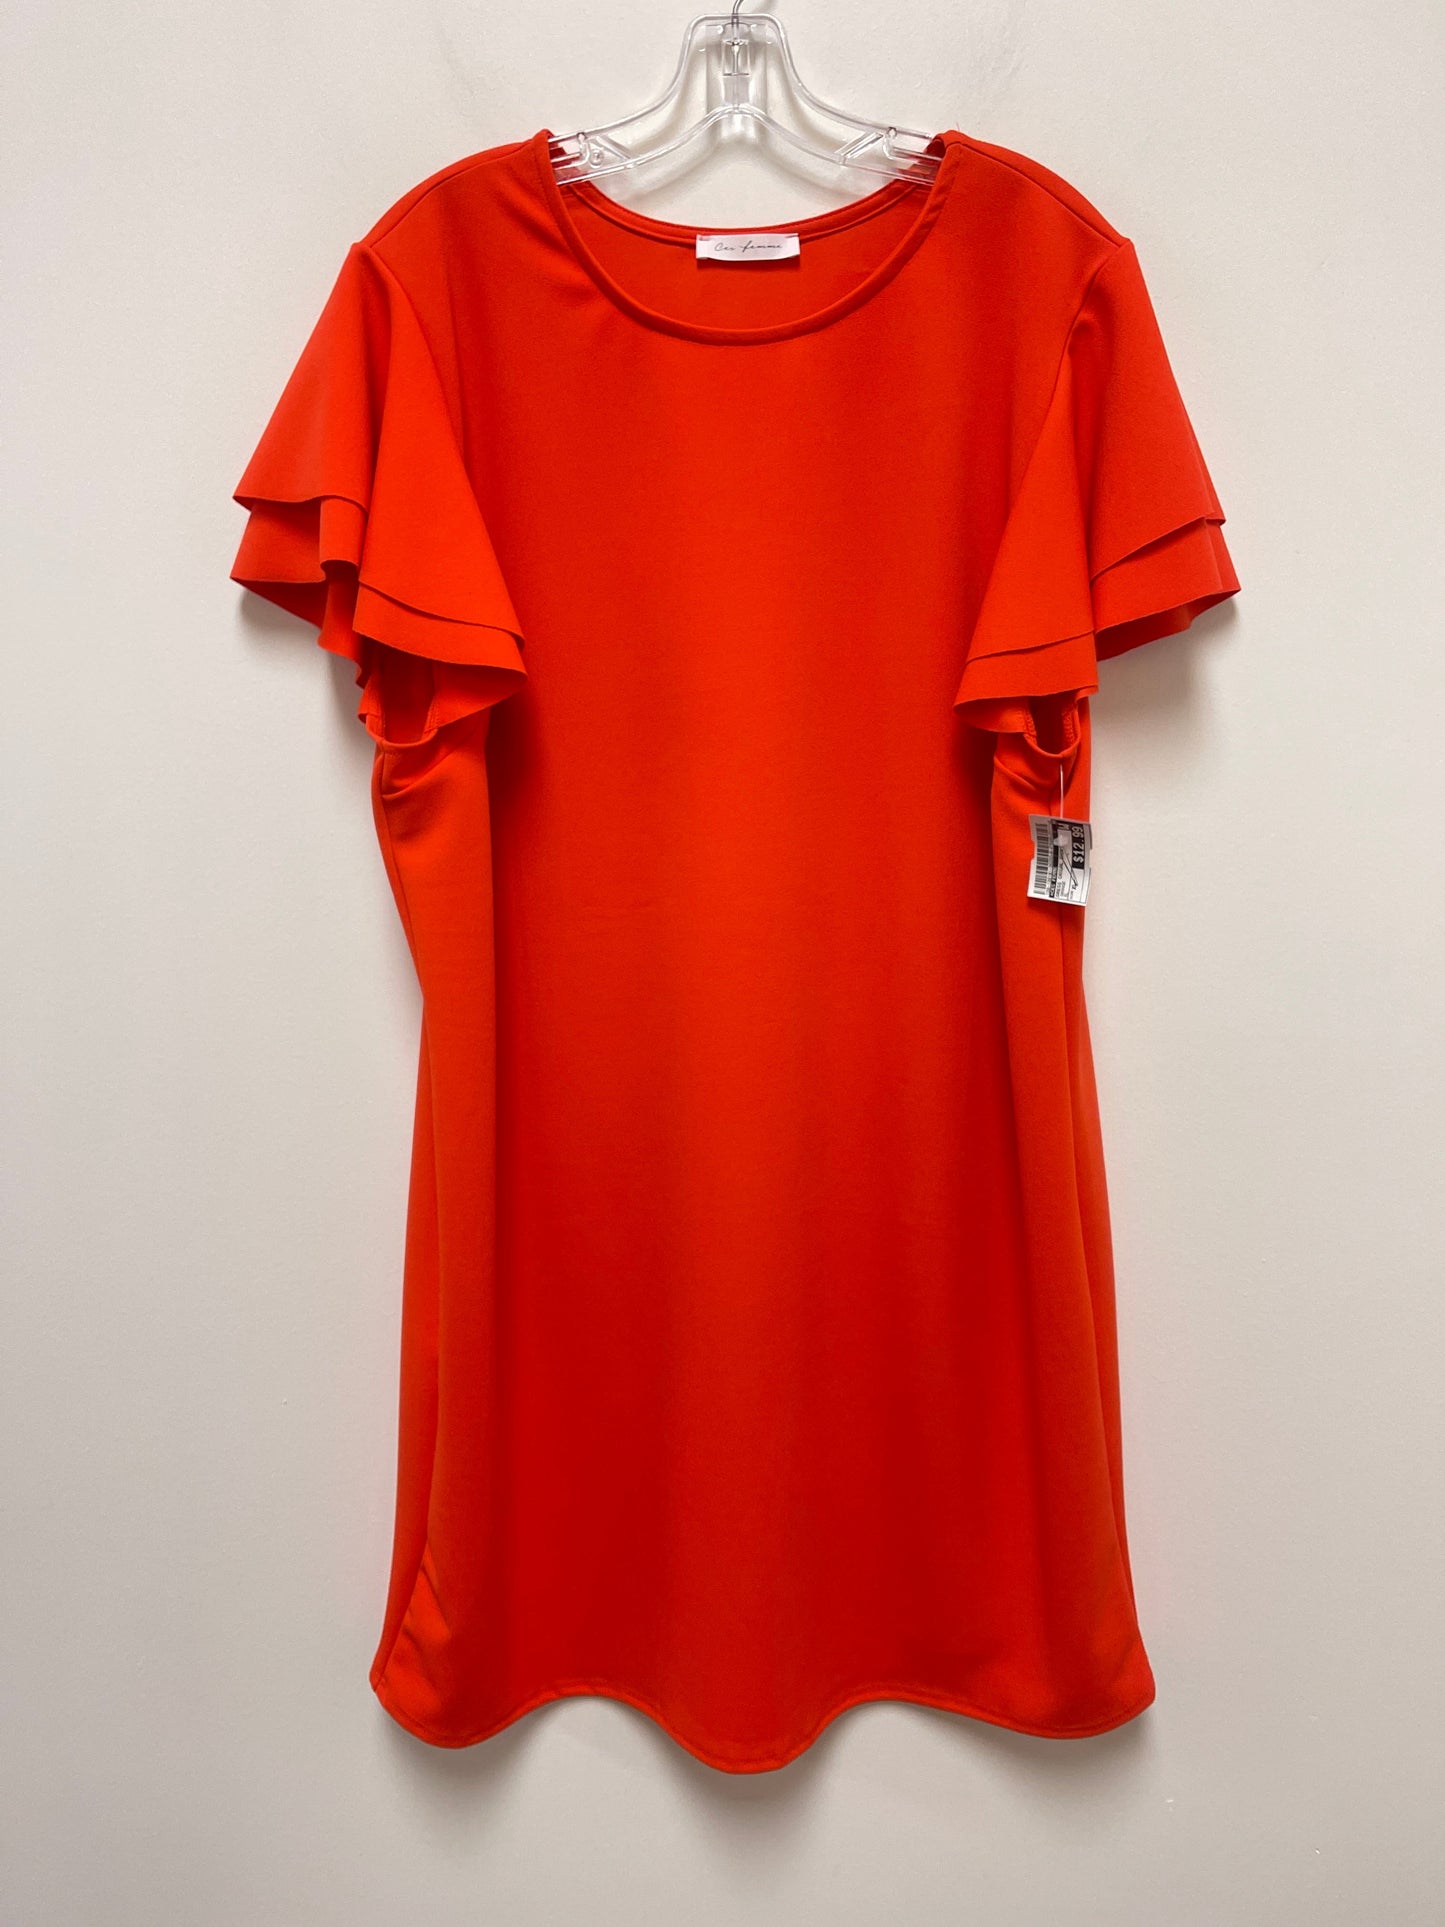 Dress Casual Short By Ces Femme  Size: Xl